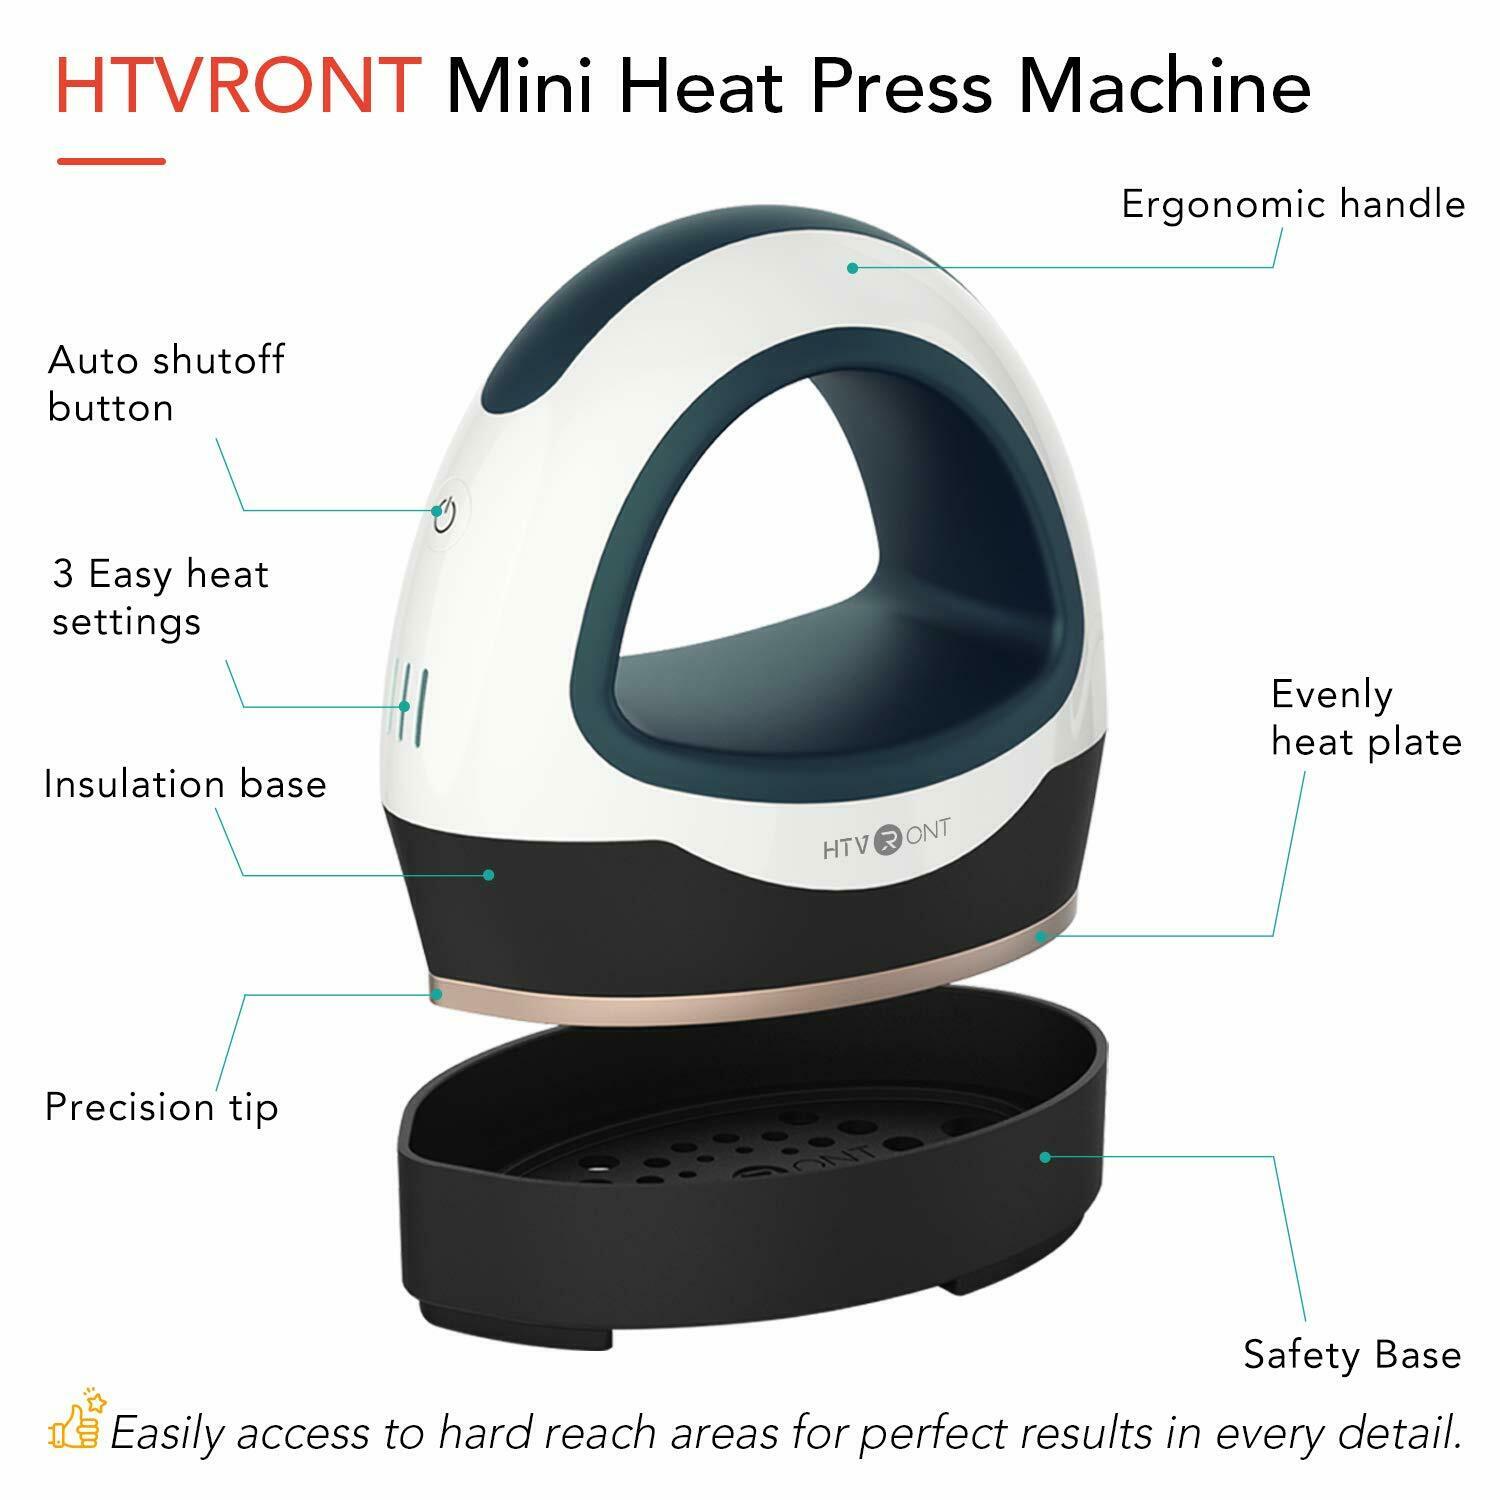 HTVRONT Portable MINI Heat Press Machine for HTV or Sublimation BulkCrafting Blanks